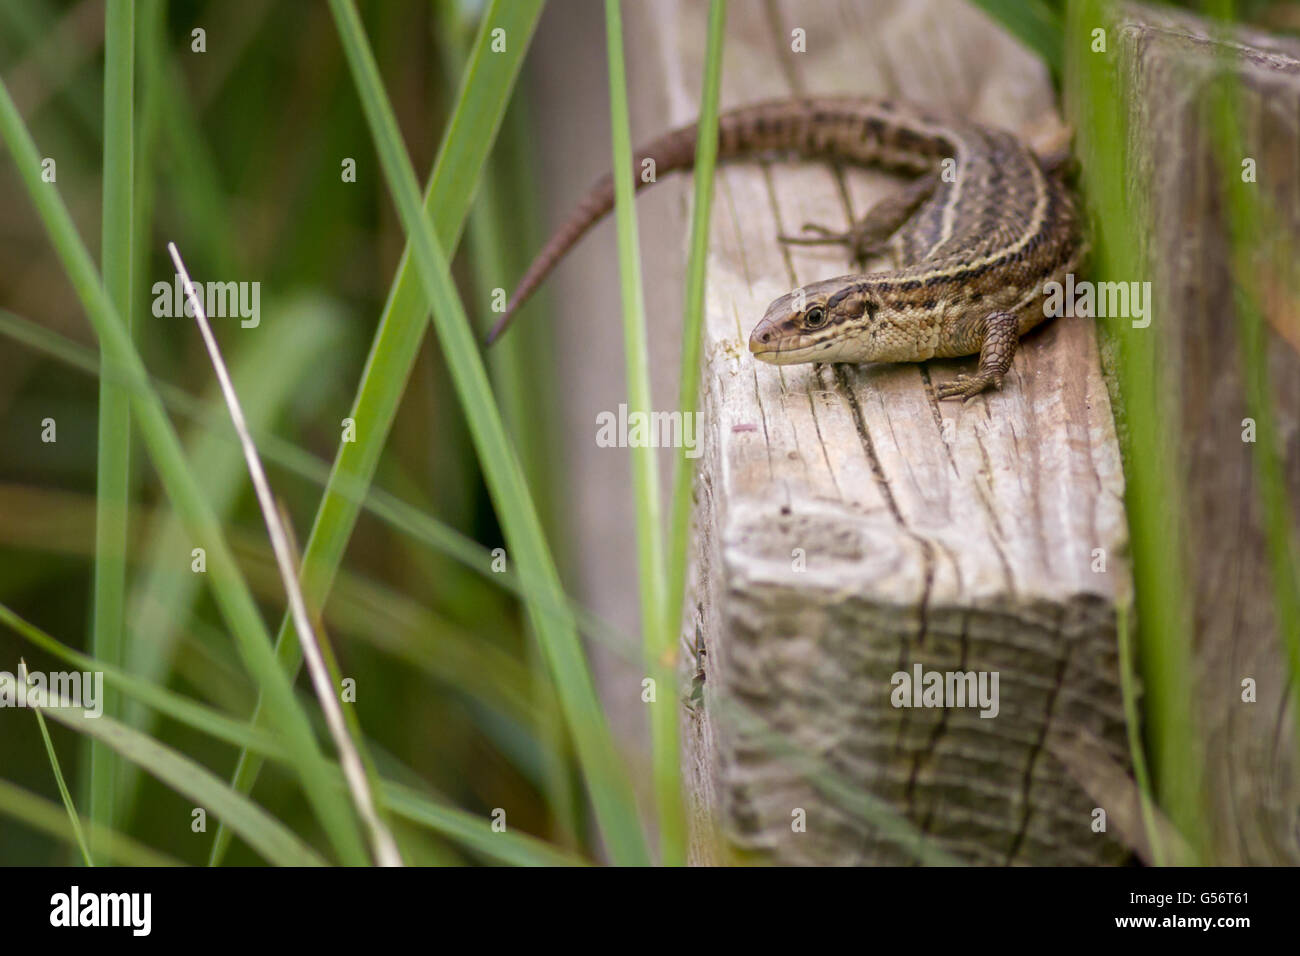 Common lizard, Spurn Point, UK Stock Photo